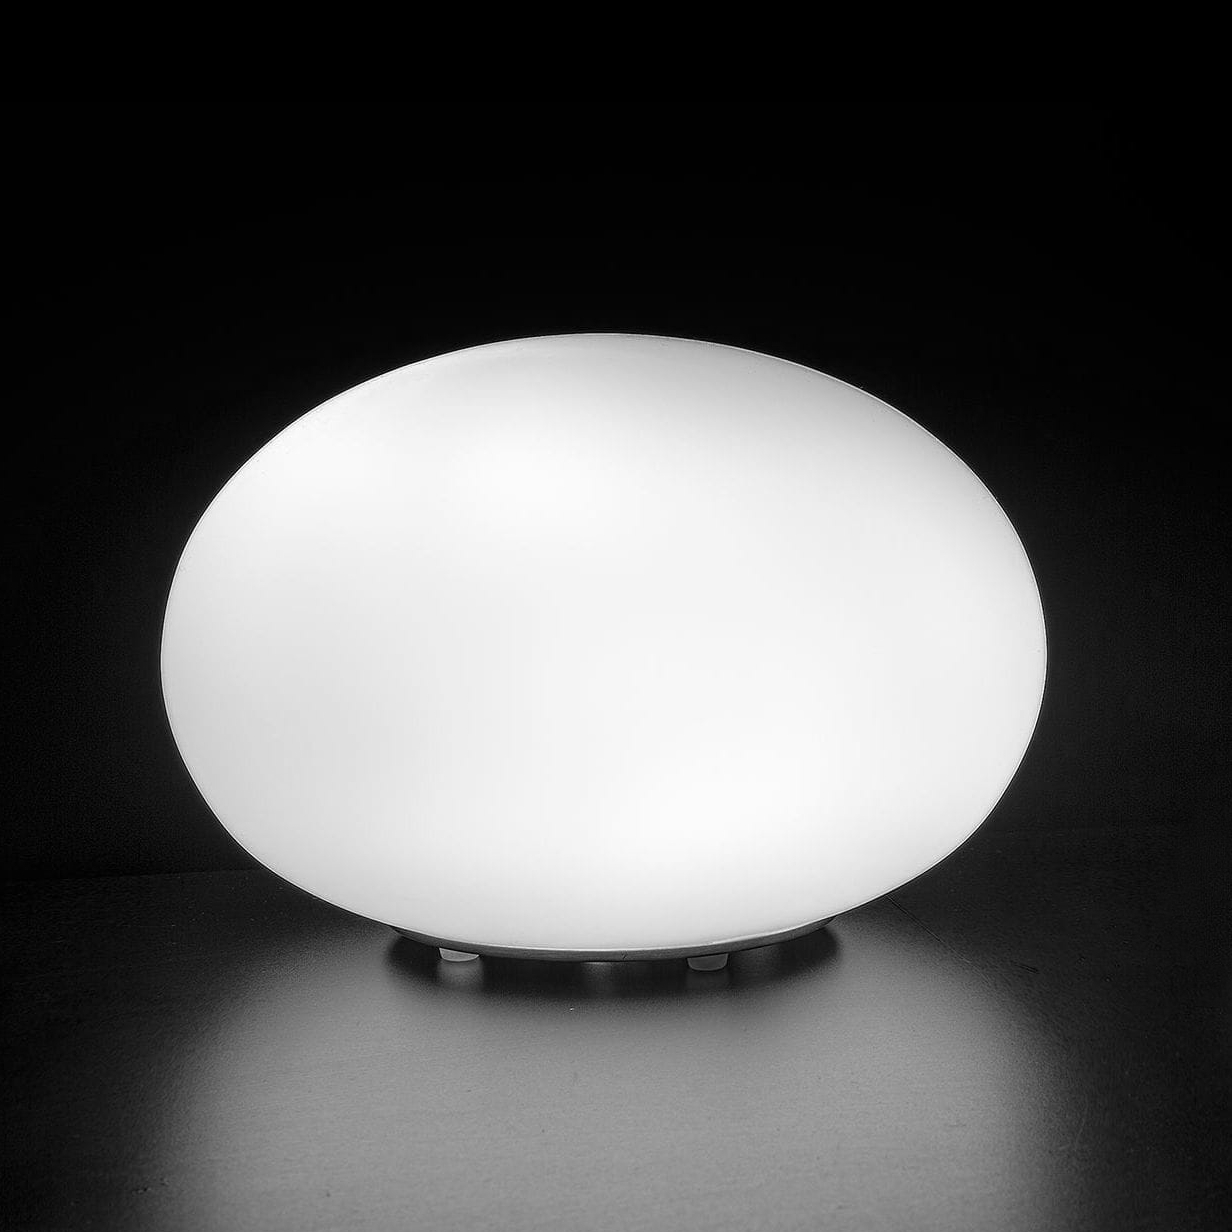 Gilbert by Panzeri – 8 11/16″ x 5 1/2″ Portable, Ambient offers quality European interior lighting design | Zaneen Design